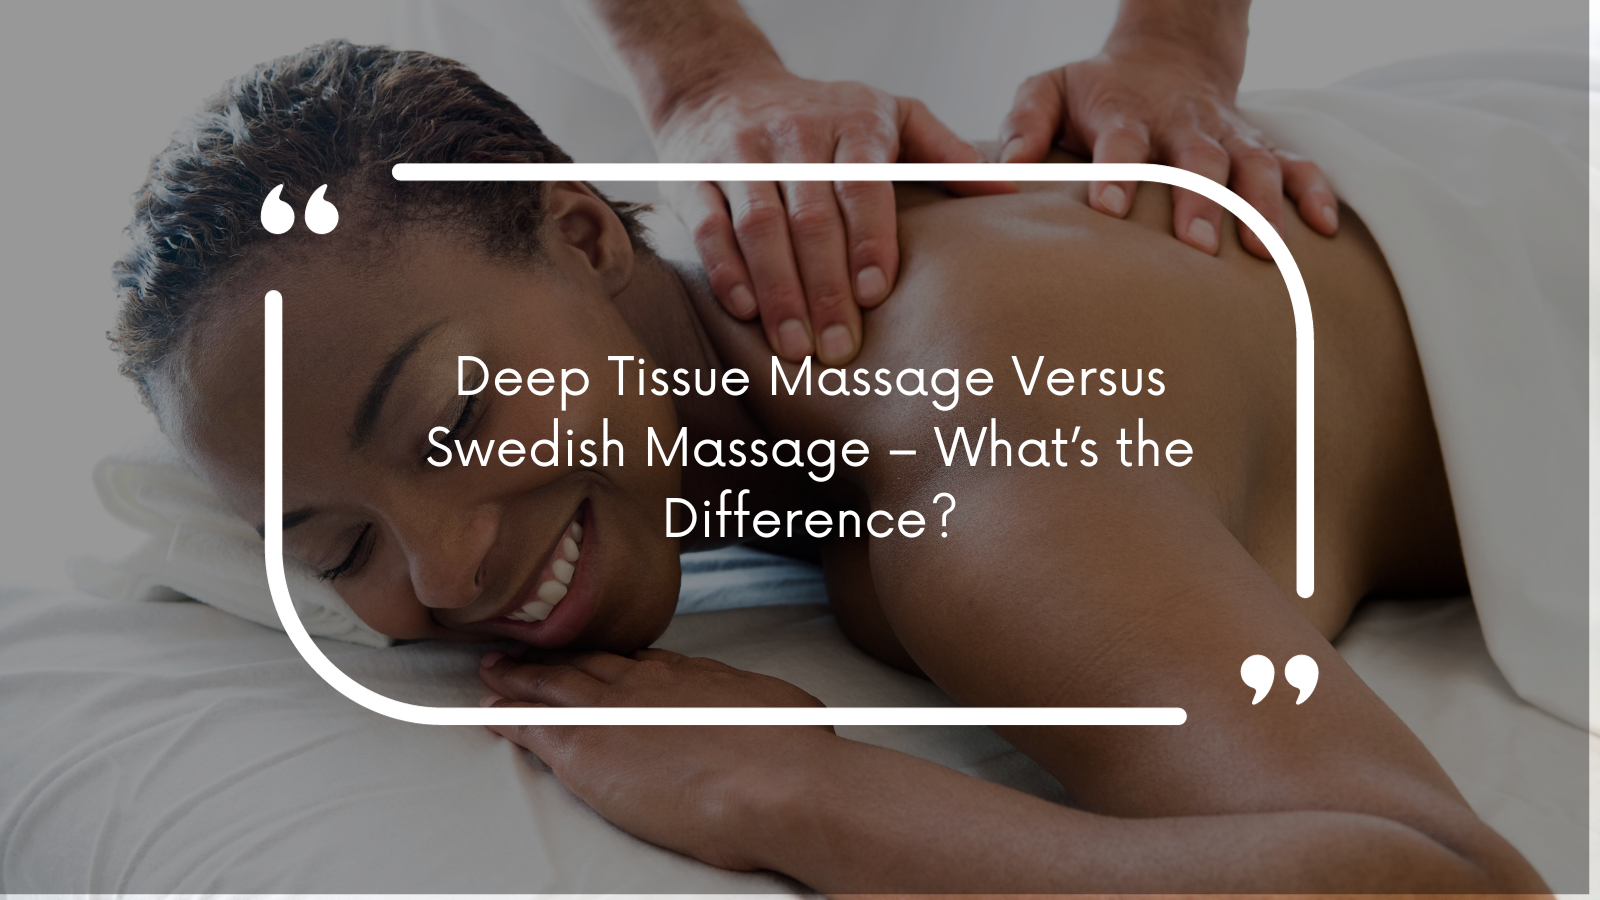 Deep Tissue Massage Versus Swedish Massage - What's the Difference?